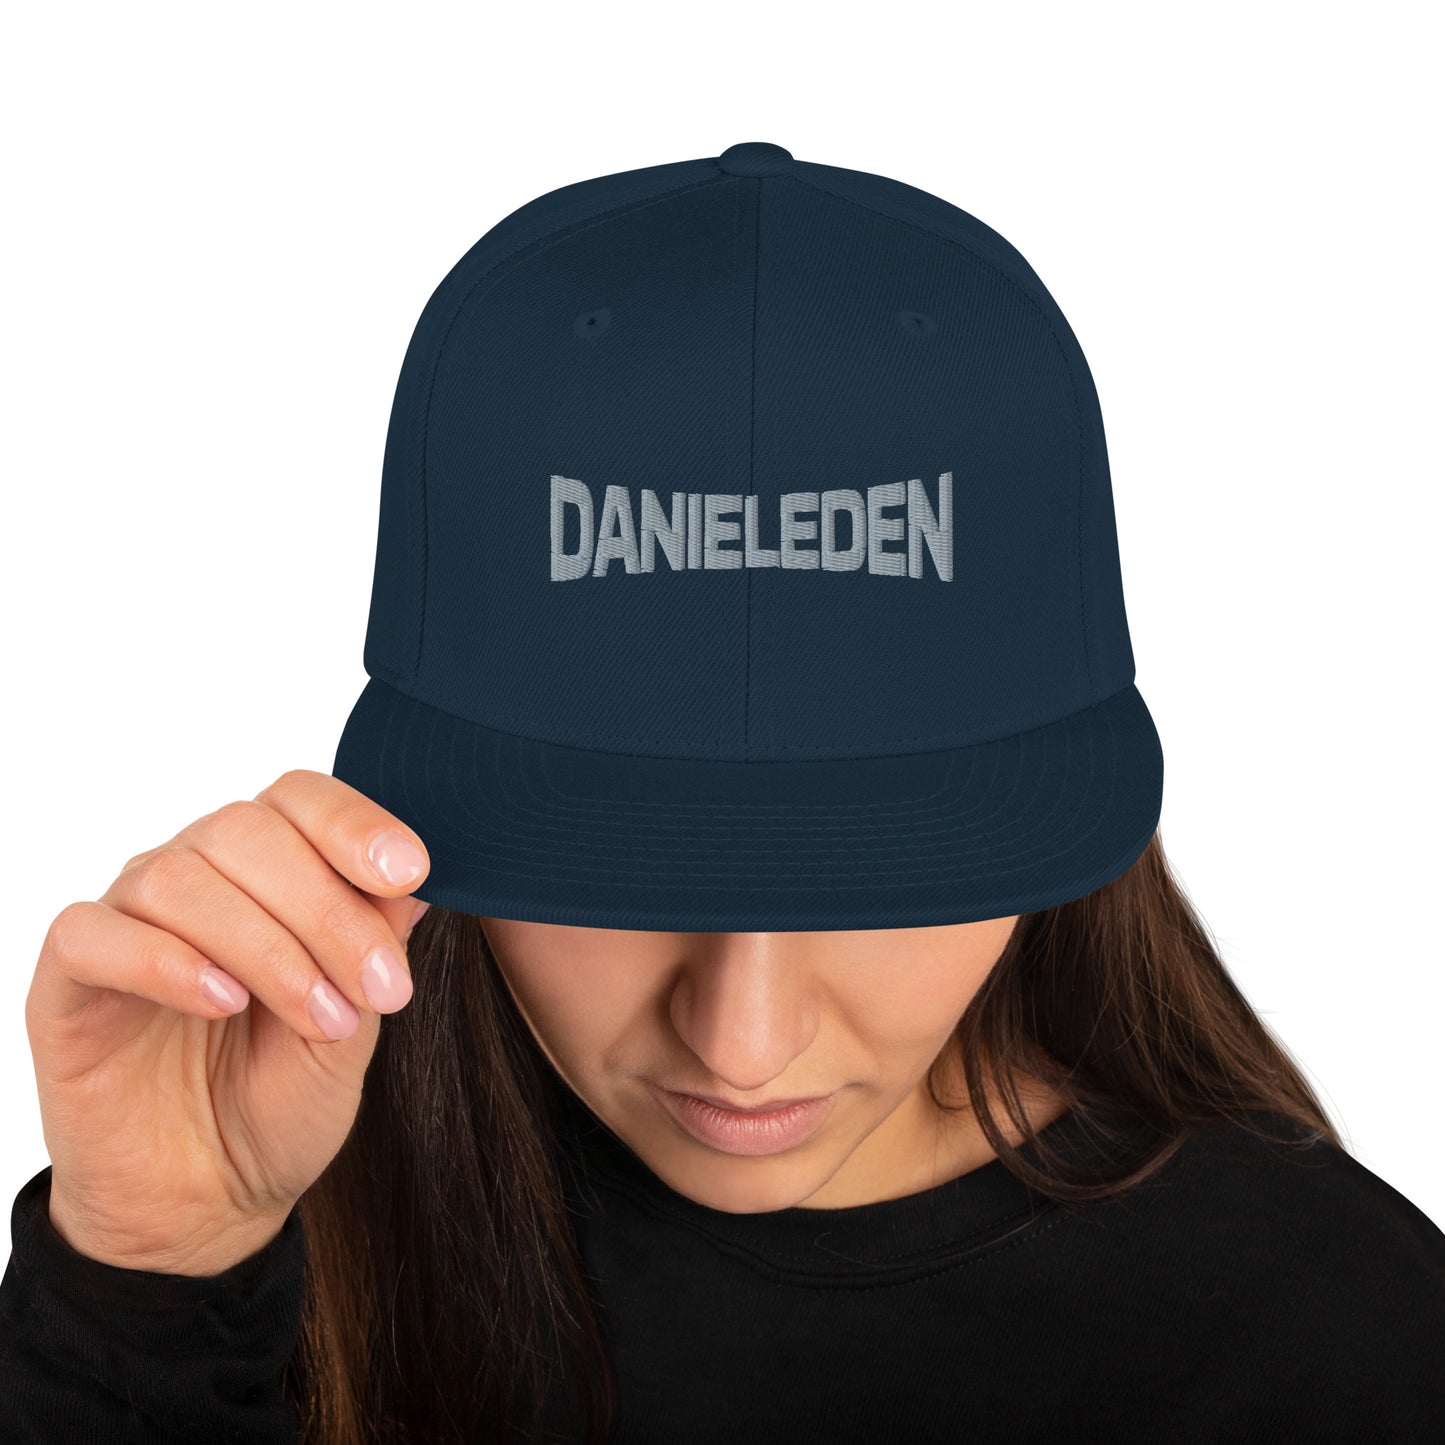 DanielEden Snackback-camouflage